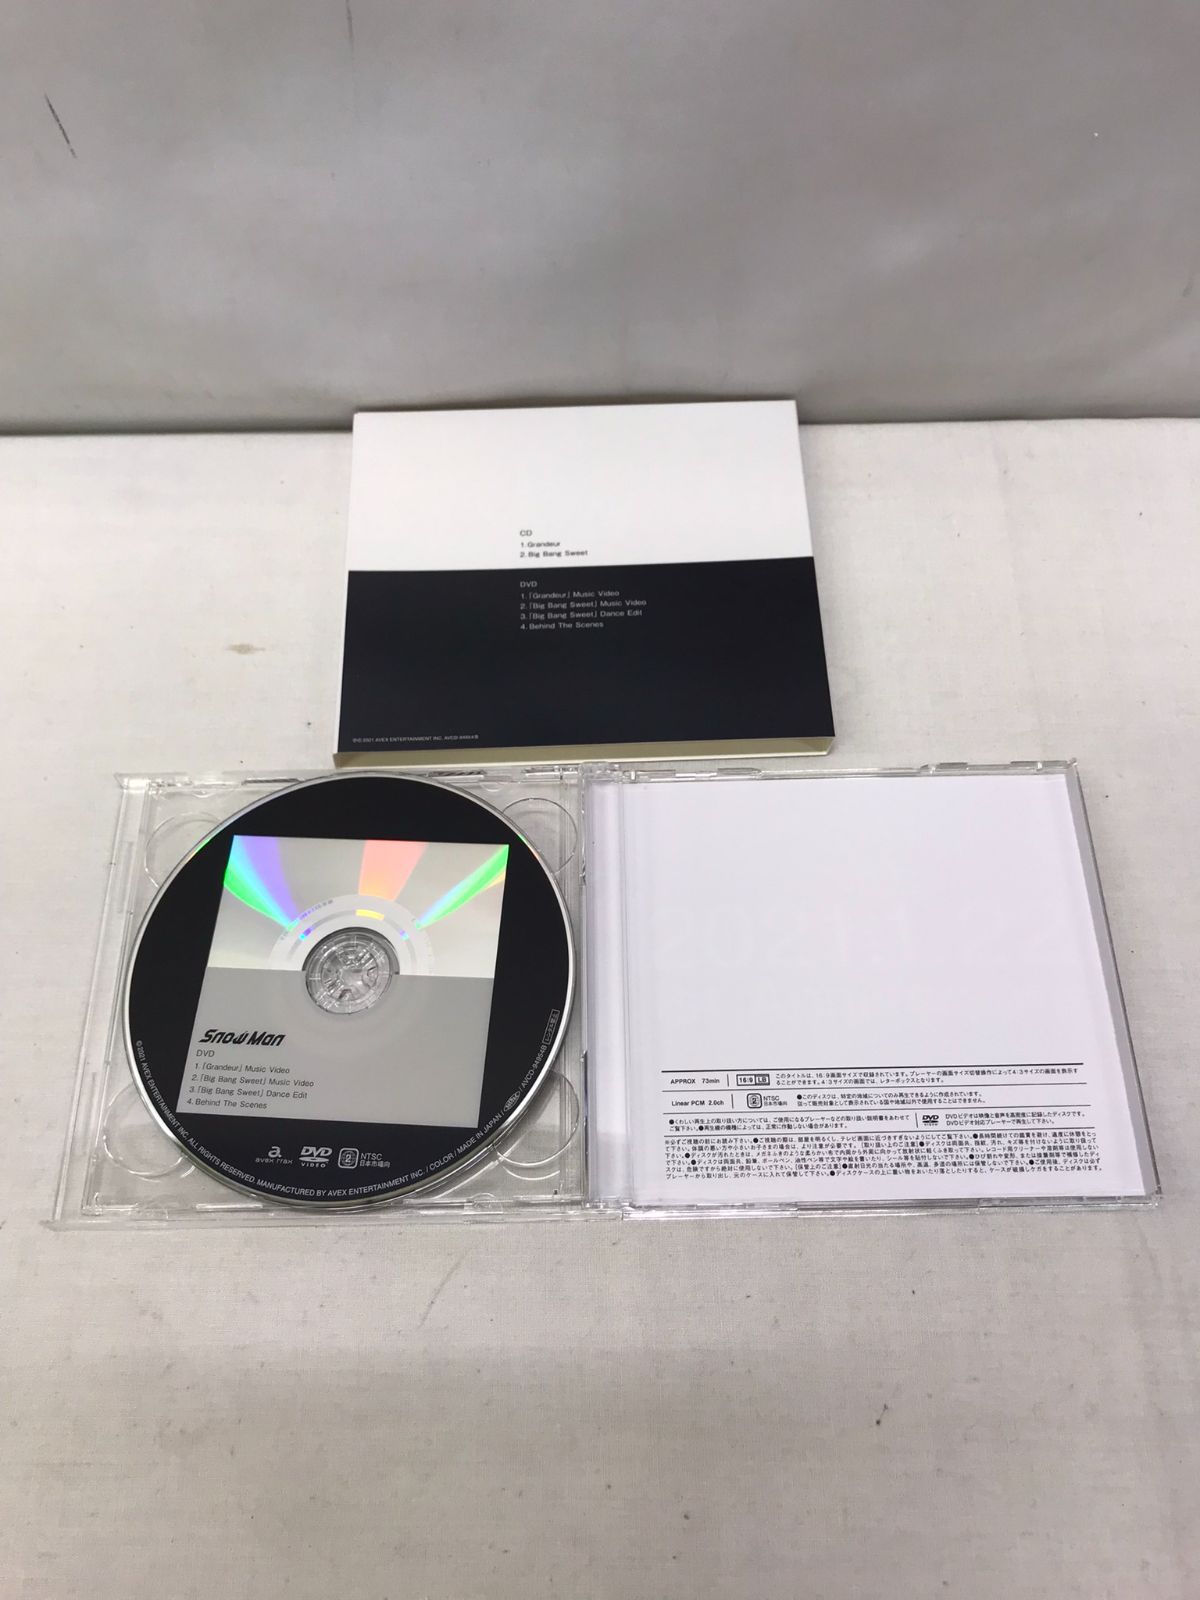 CD】Grandeur(CD+DVD)(初回盤A) Snow Man メルカリShops